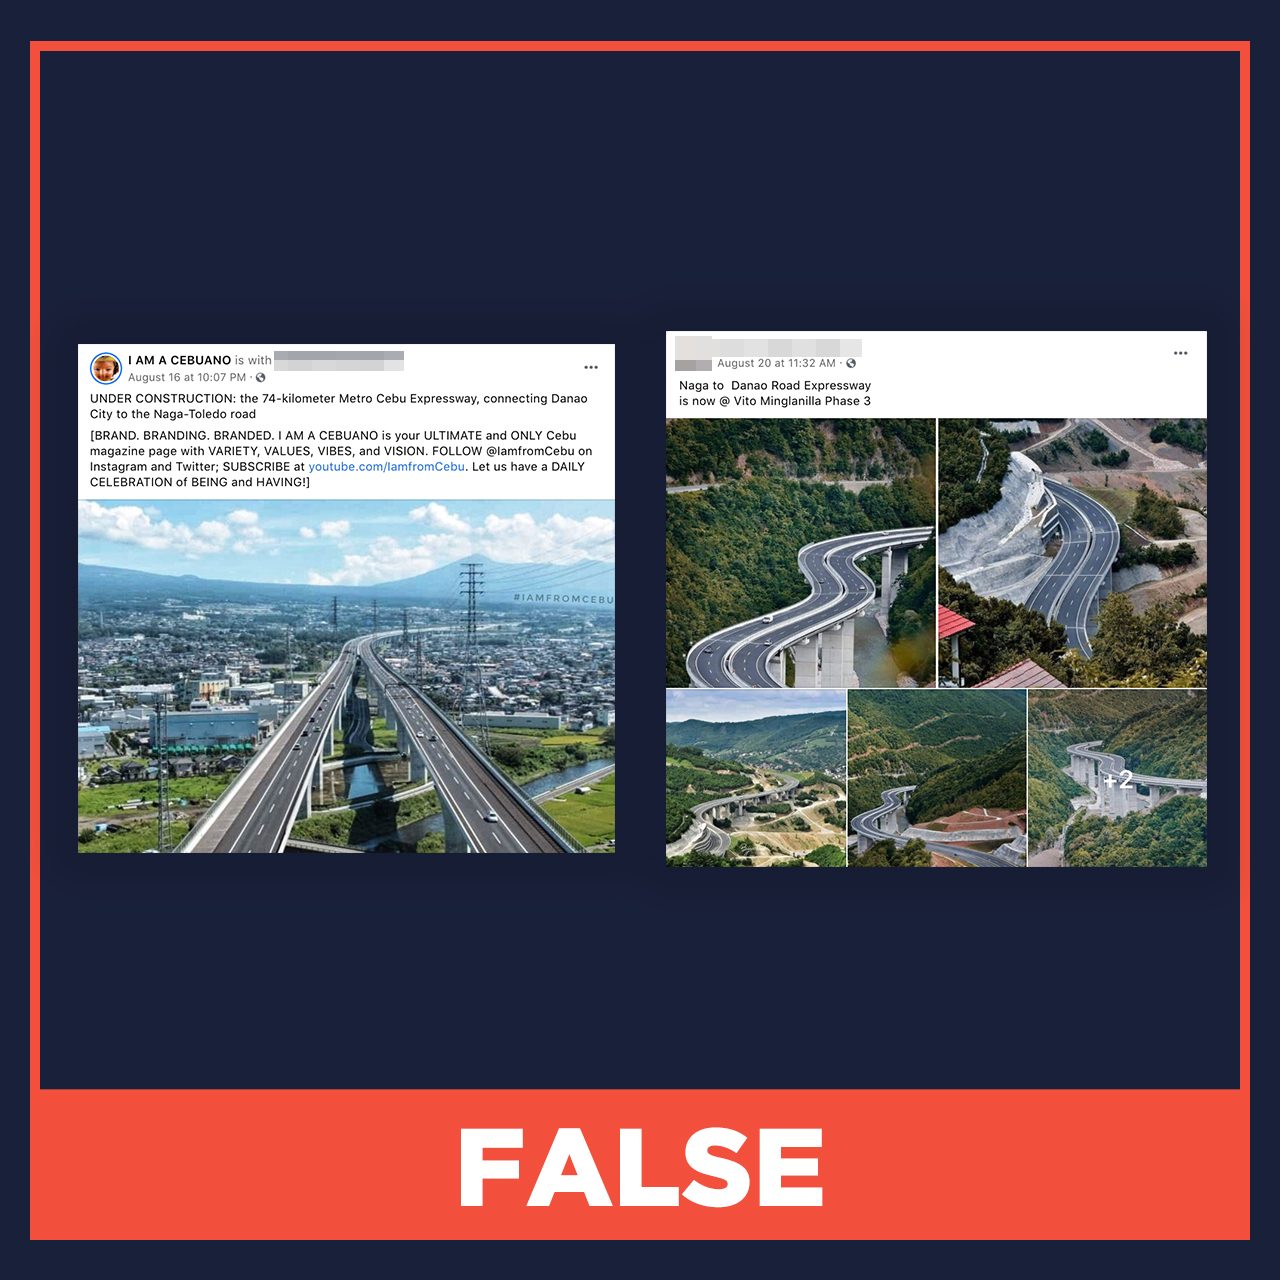 FALSE: Photos of Metro Cebu Expressway construction